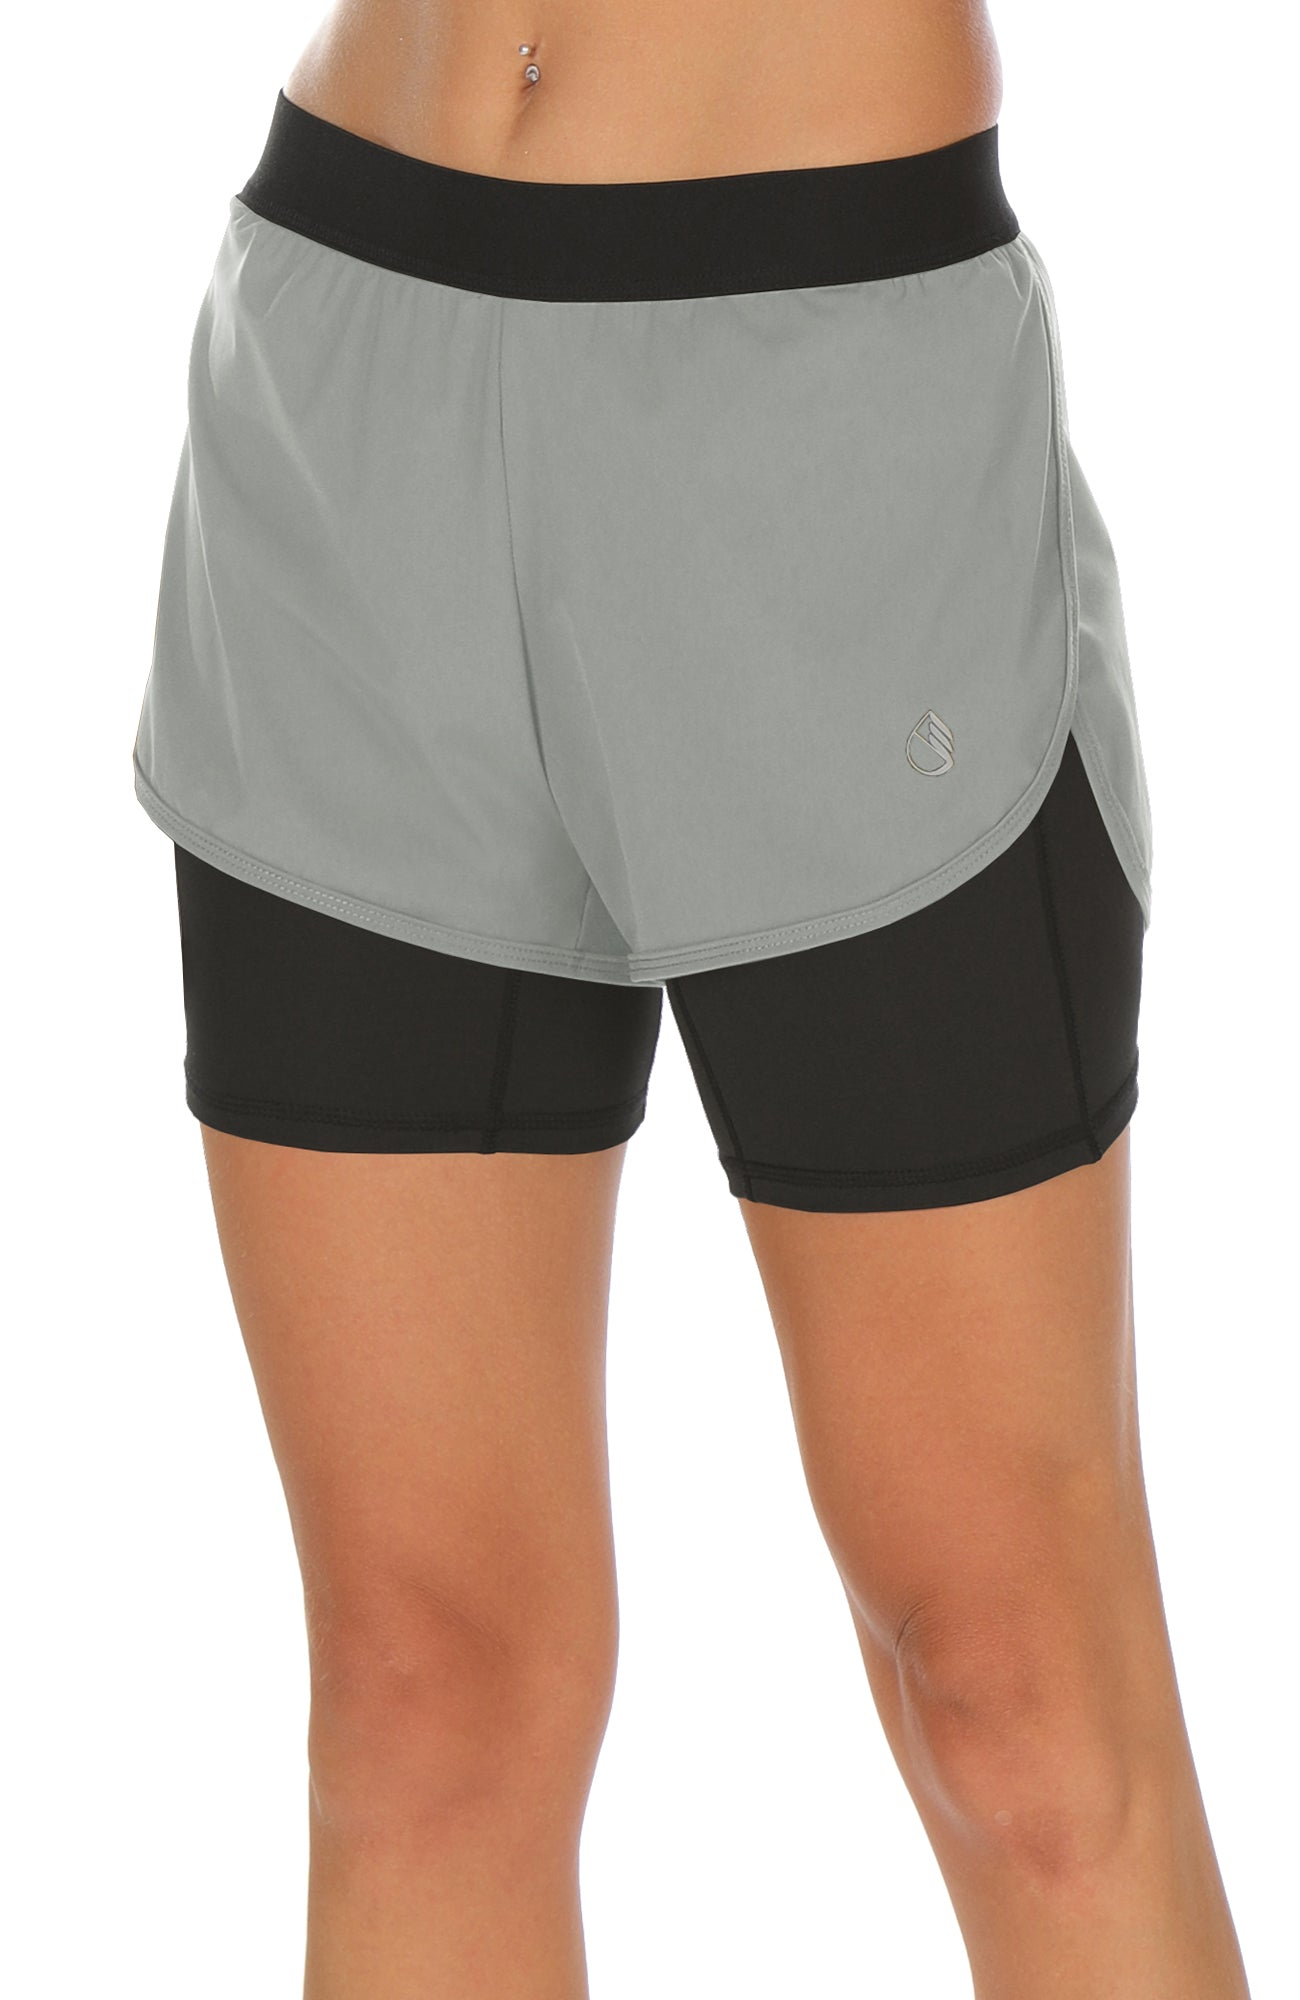 Buy Women Running Shorts Athletic Workout Running Gym Shorts at